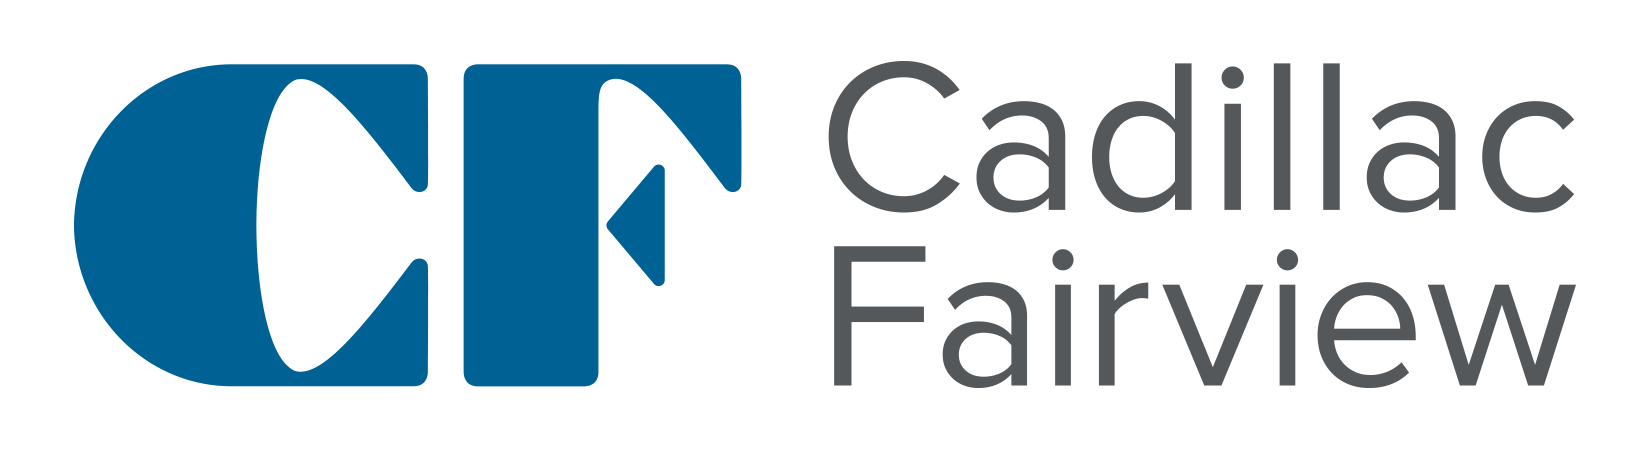 Cadillac Fairview Logo